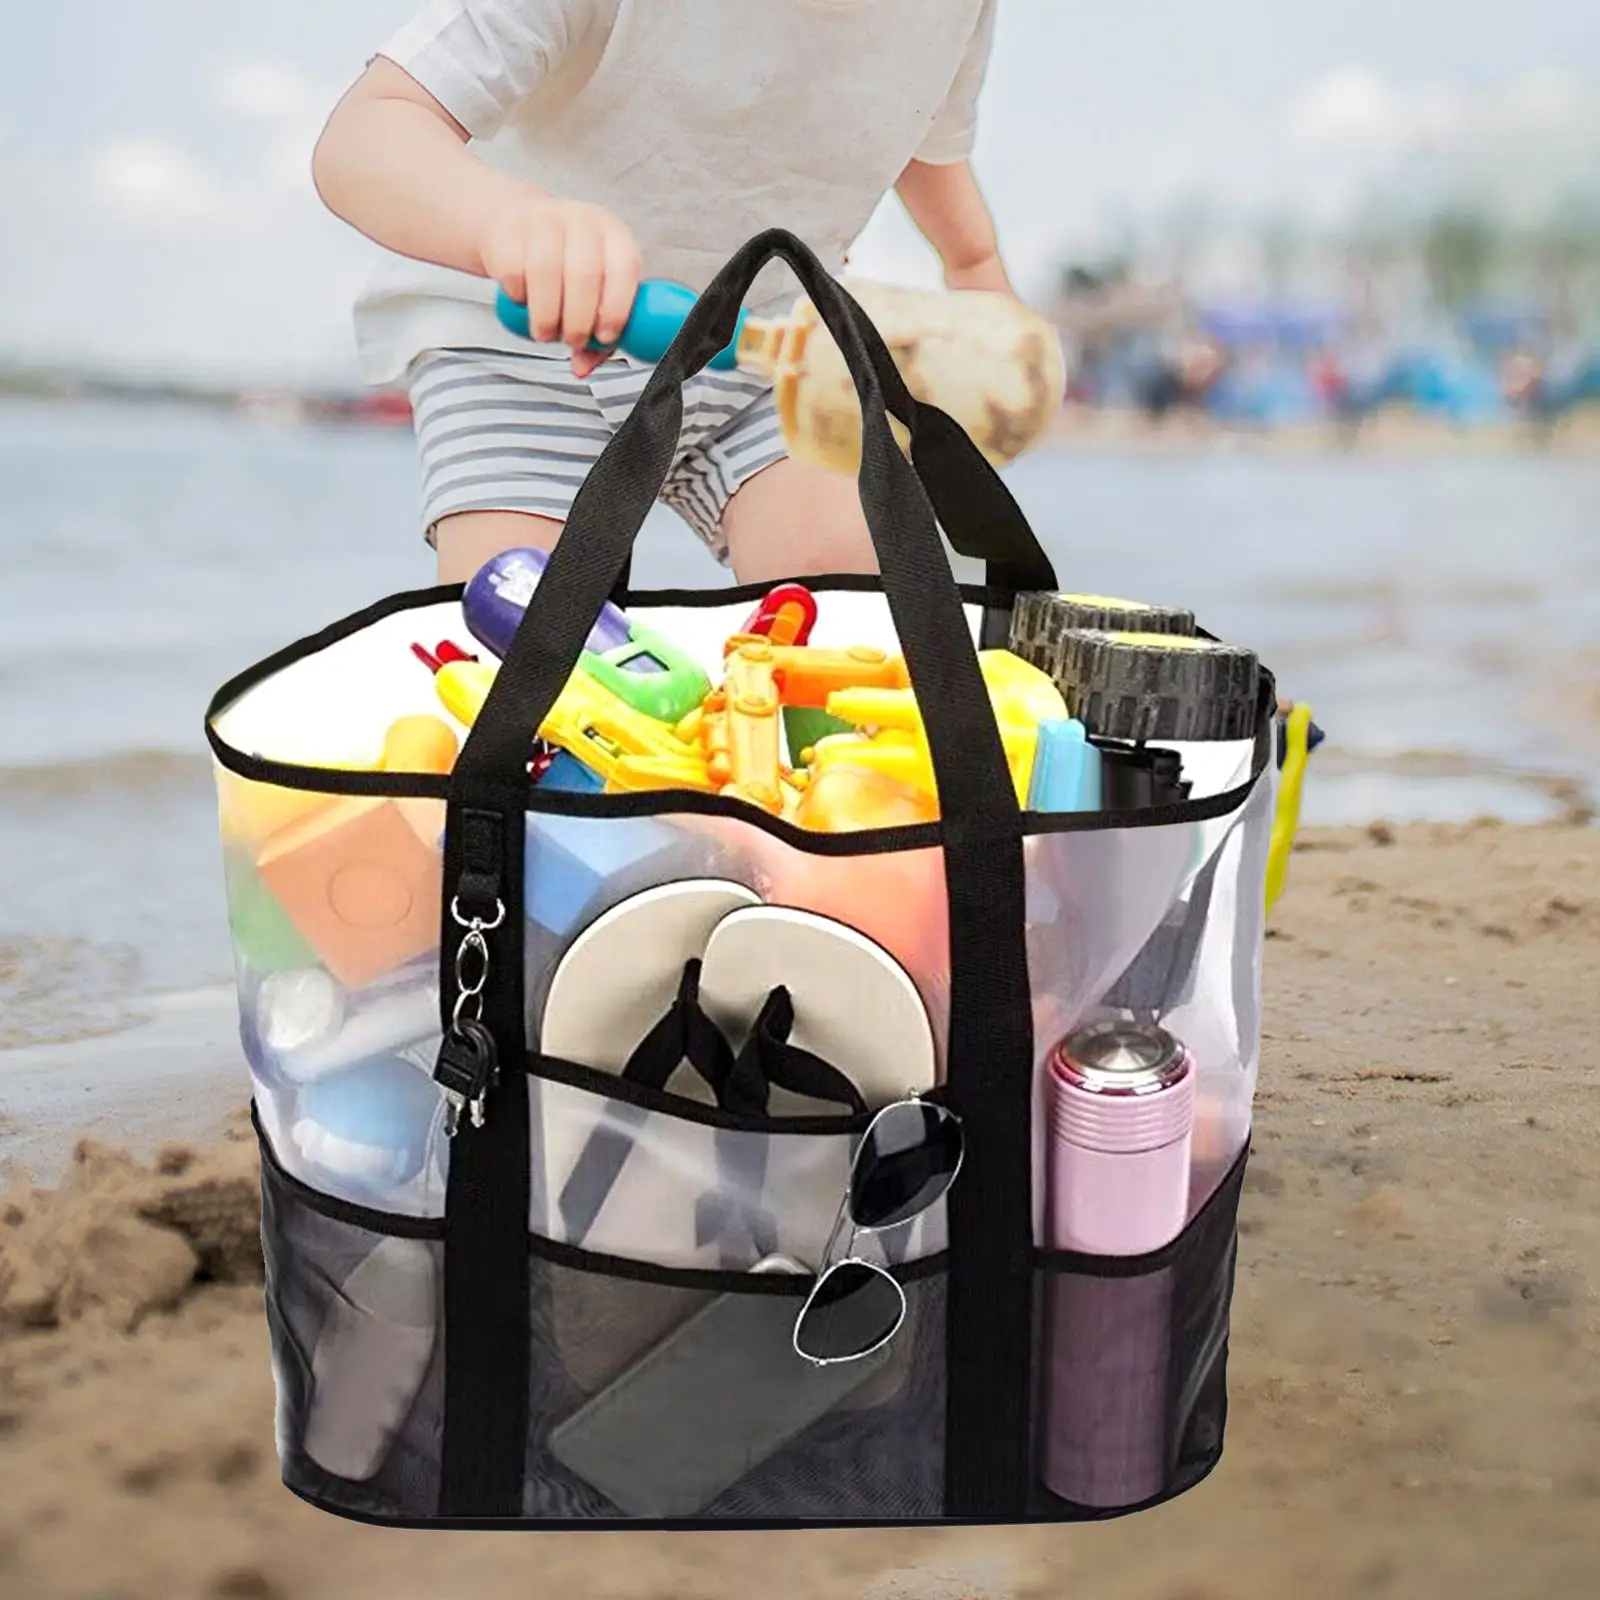 Beach Bag Tote Bag Lightweight Handbag Sand Toy Women Makeup Storage Bag for Shopping Travel Vacation Swimming Pool Outdoor